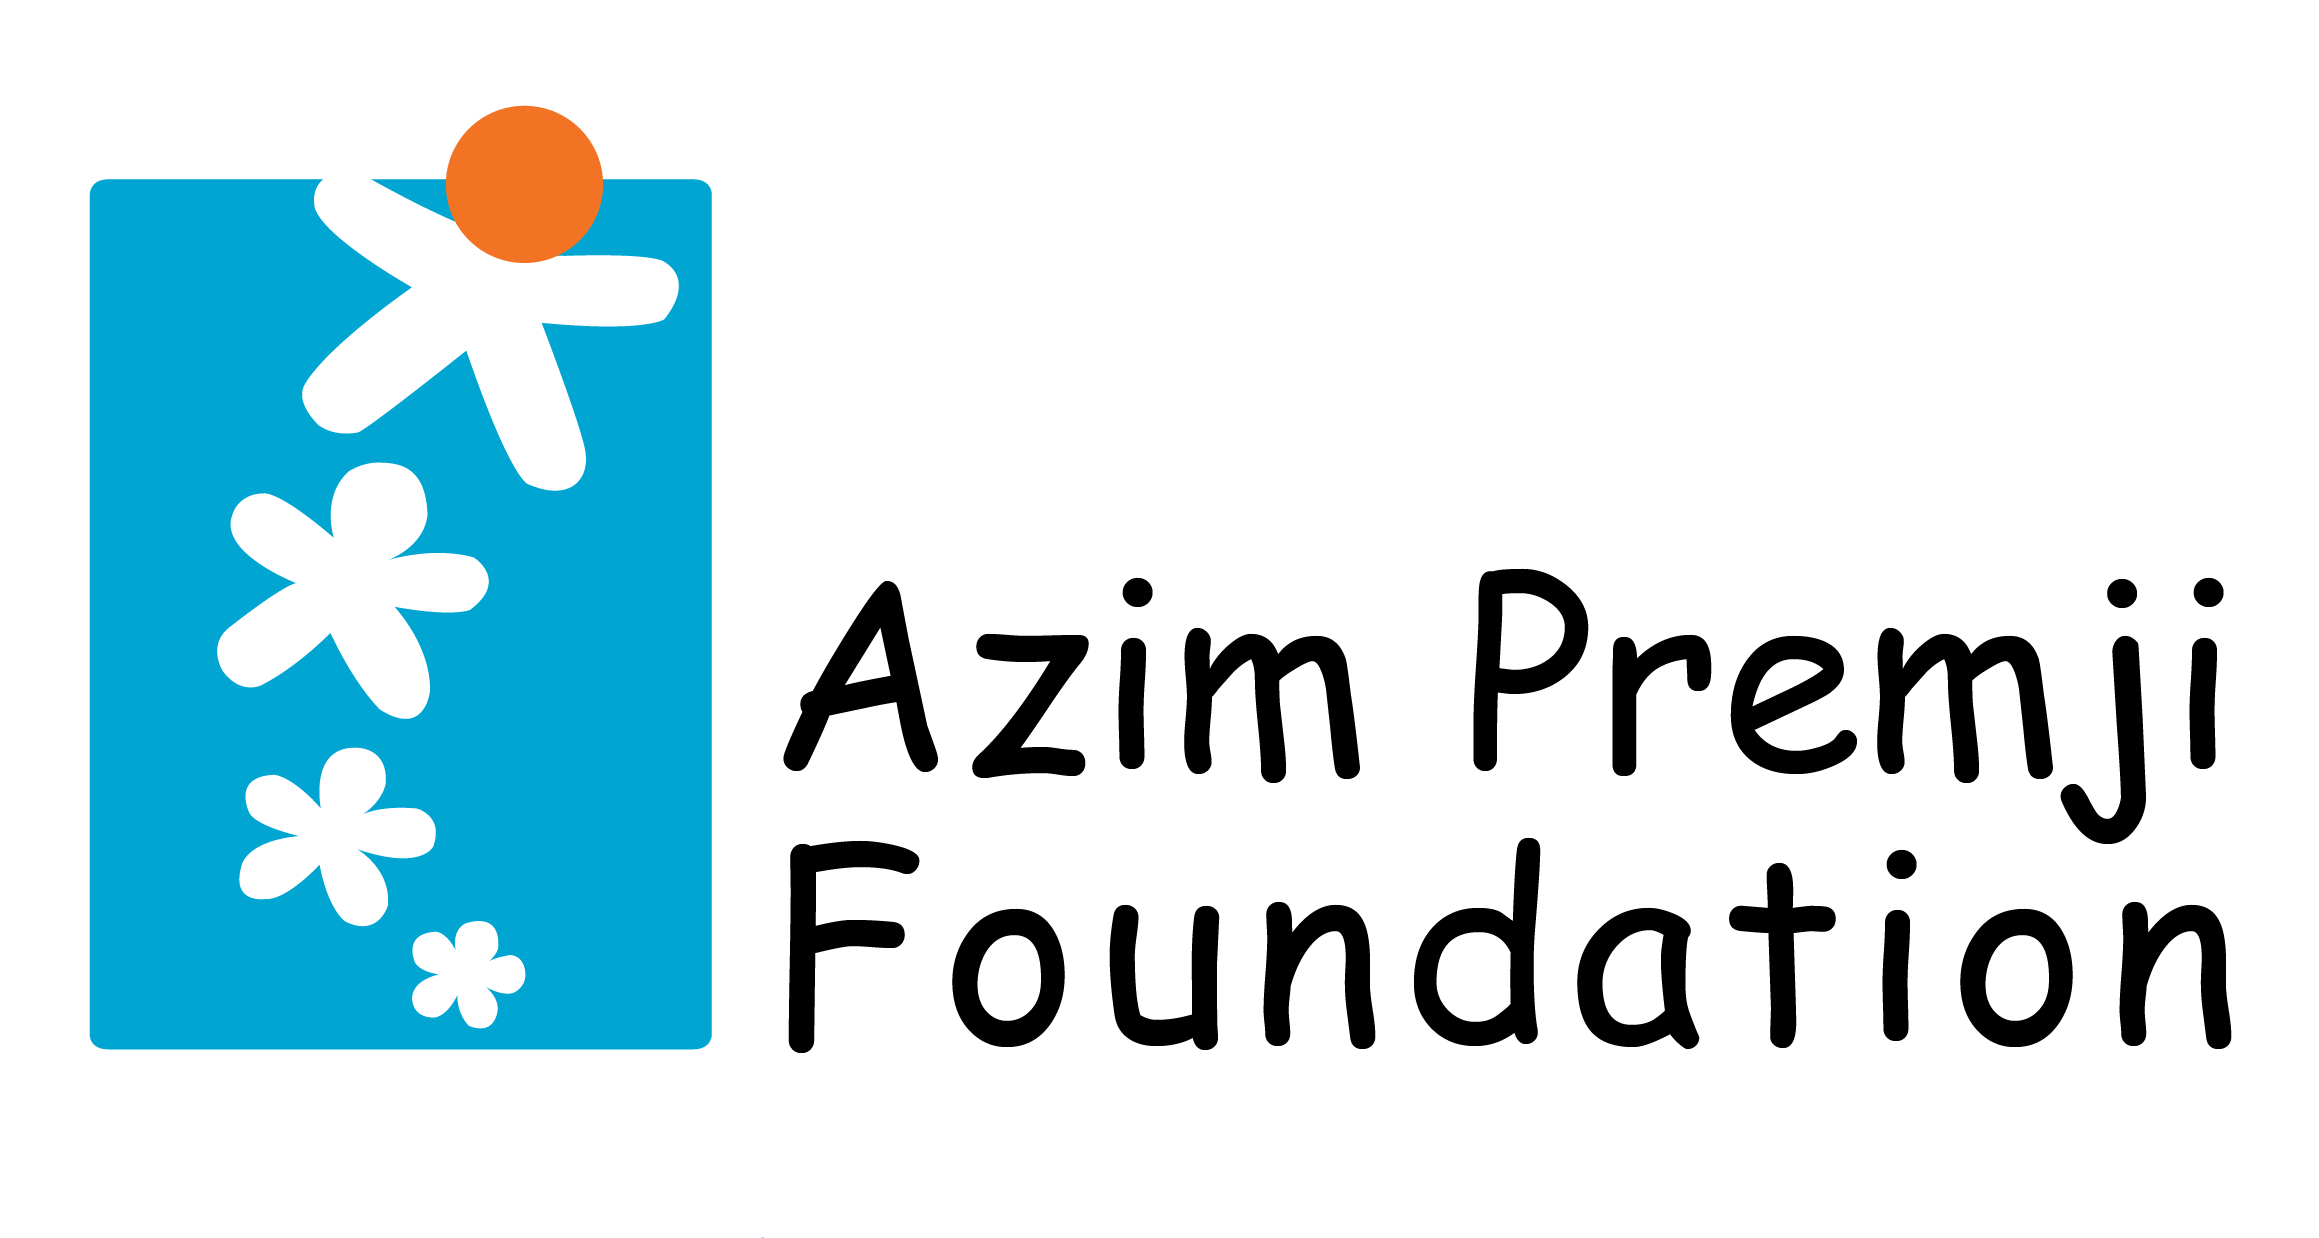 azim prem ji logo new